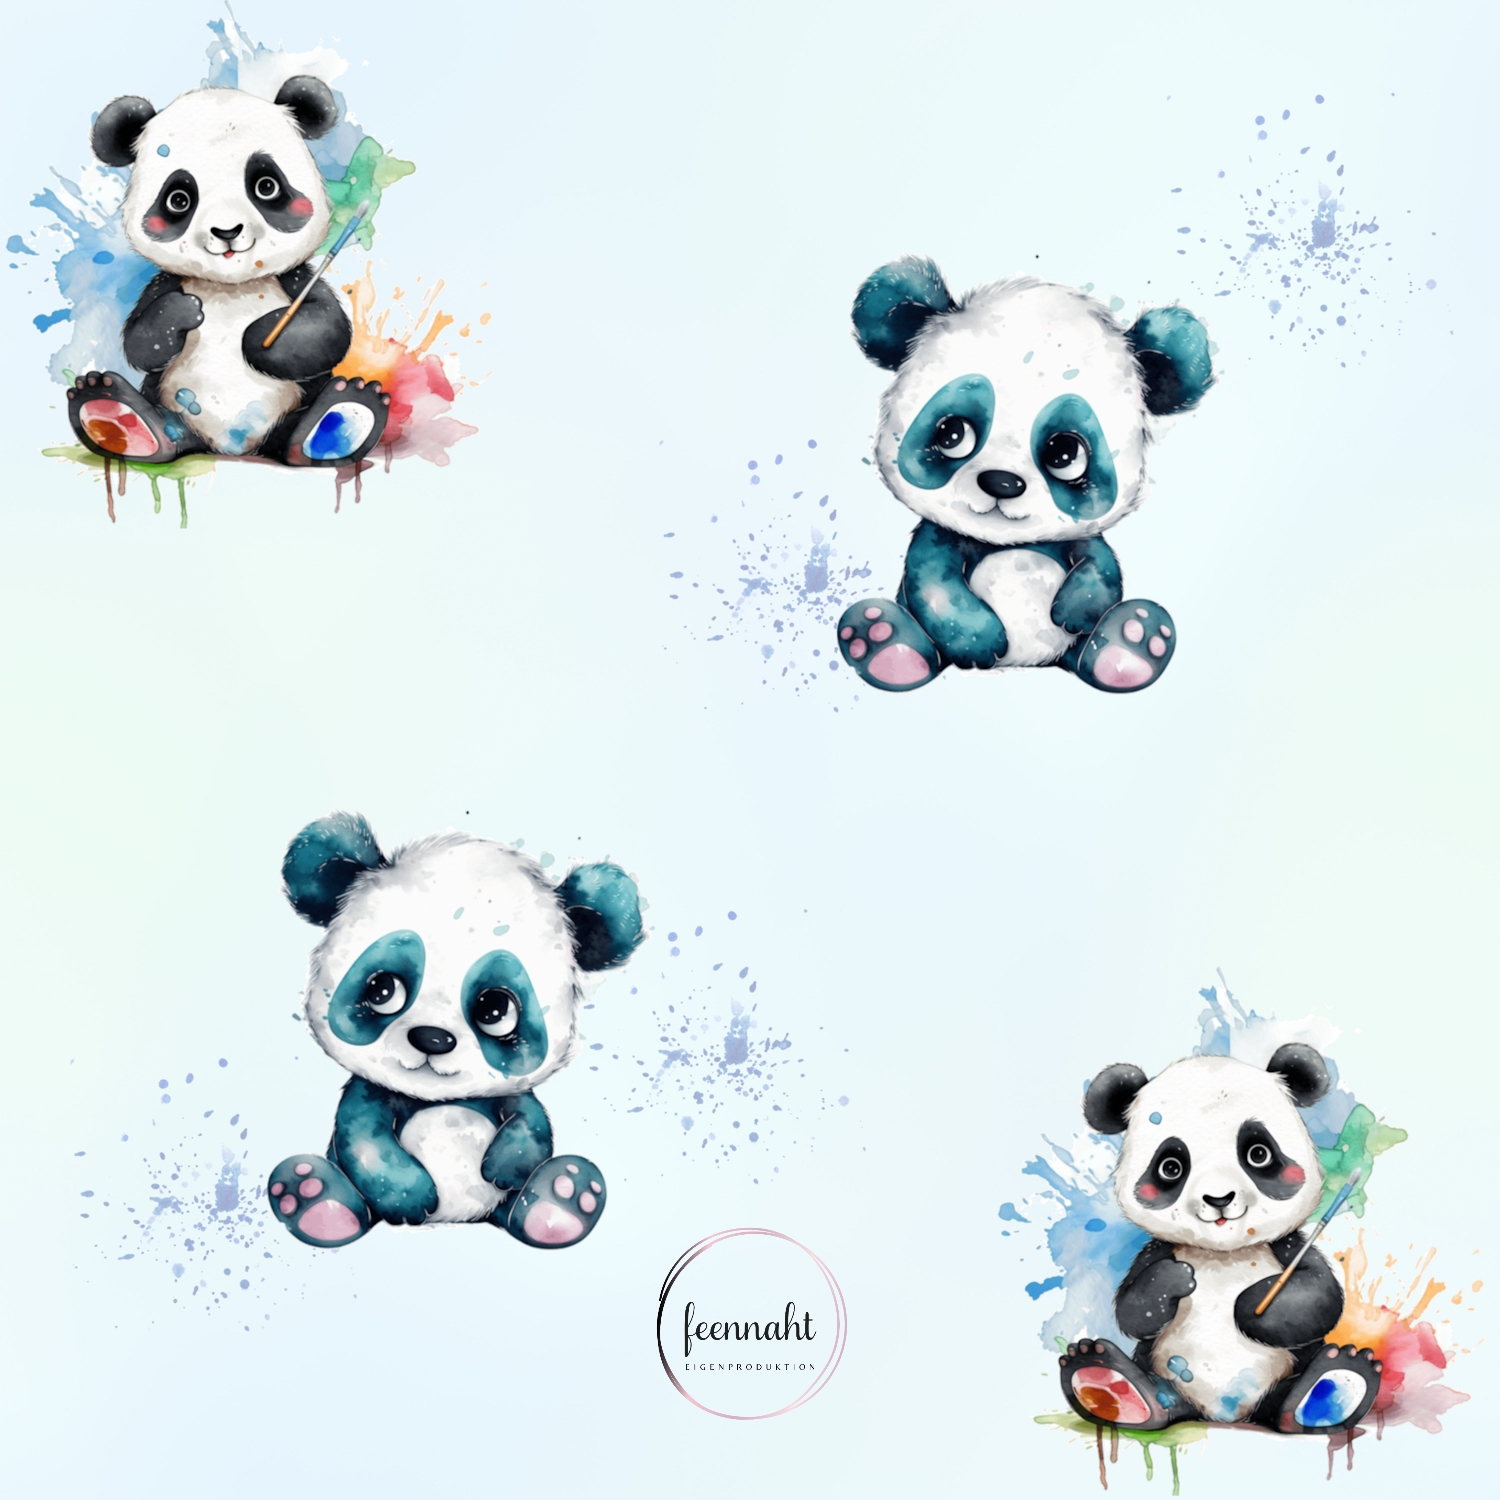 Vorbestellung - Jersey o. French Terry / 23,00 EUR/m - Eigenproduktion - Panda hellblau